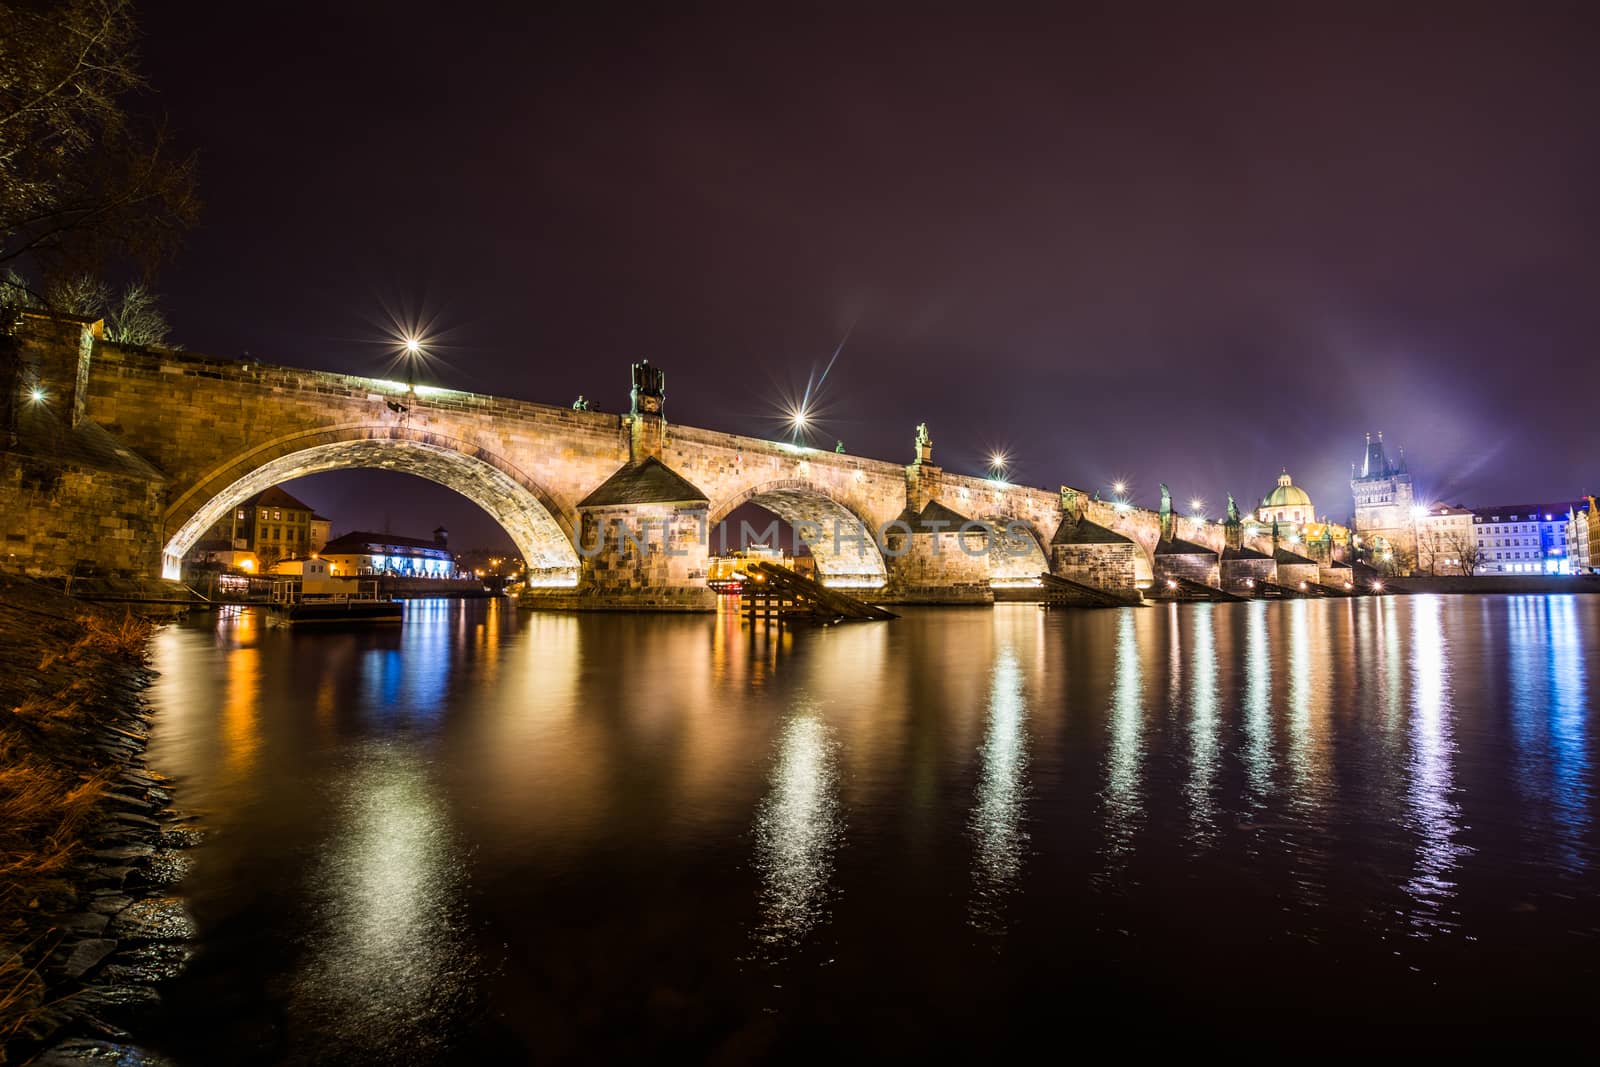 Night Charles Bridge. Prague, Czech Republic. 2014-01-05